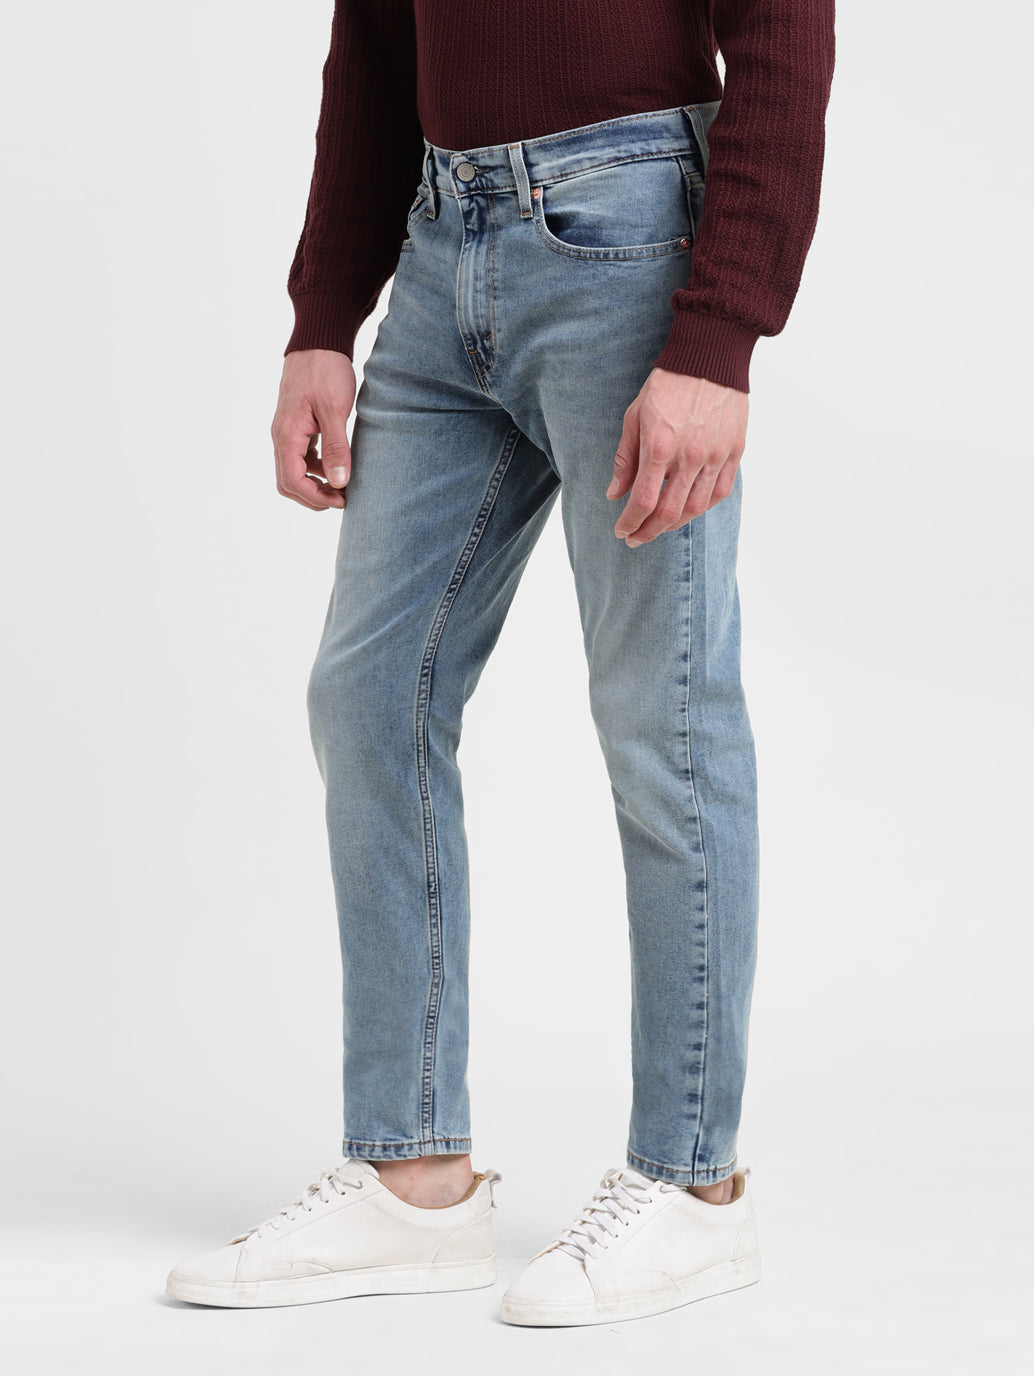 Men's 512 Blue Slim Tapered Fit Jeans